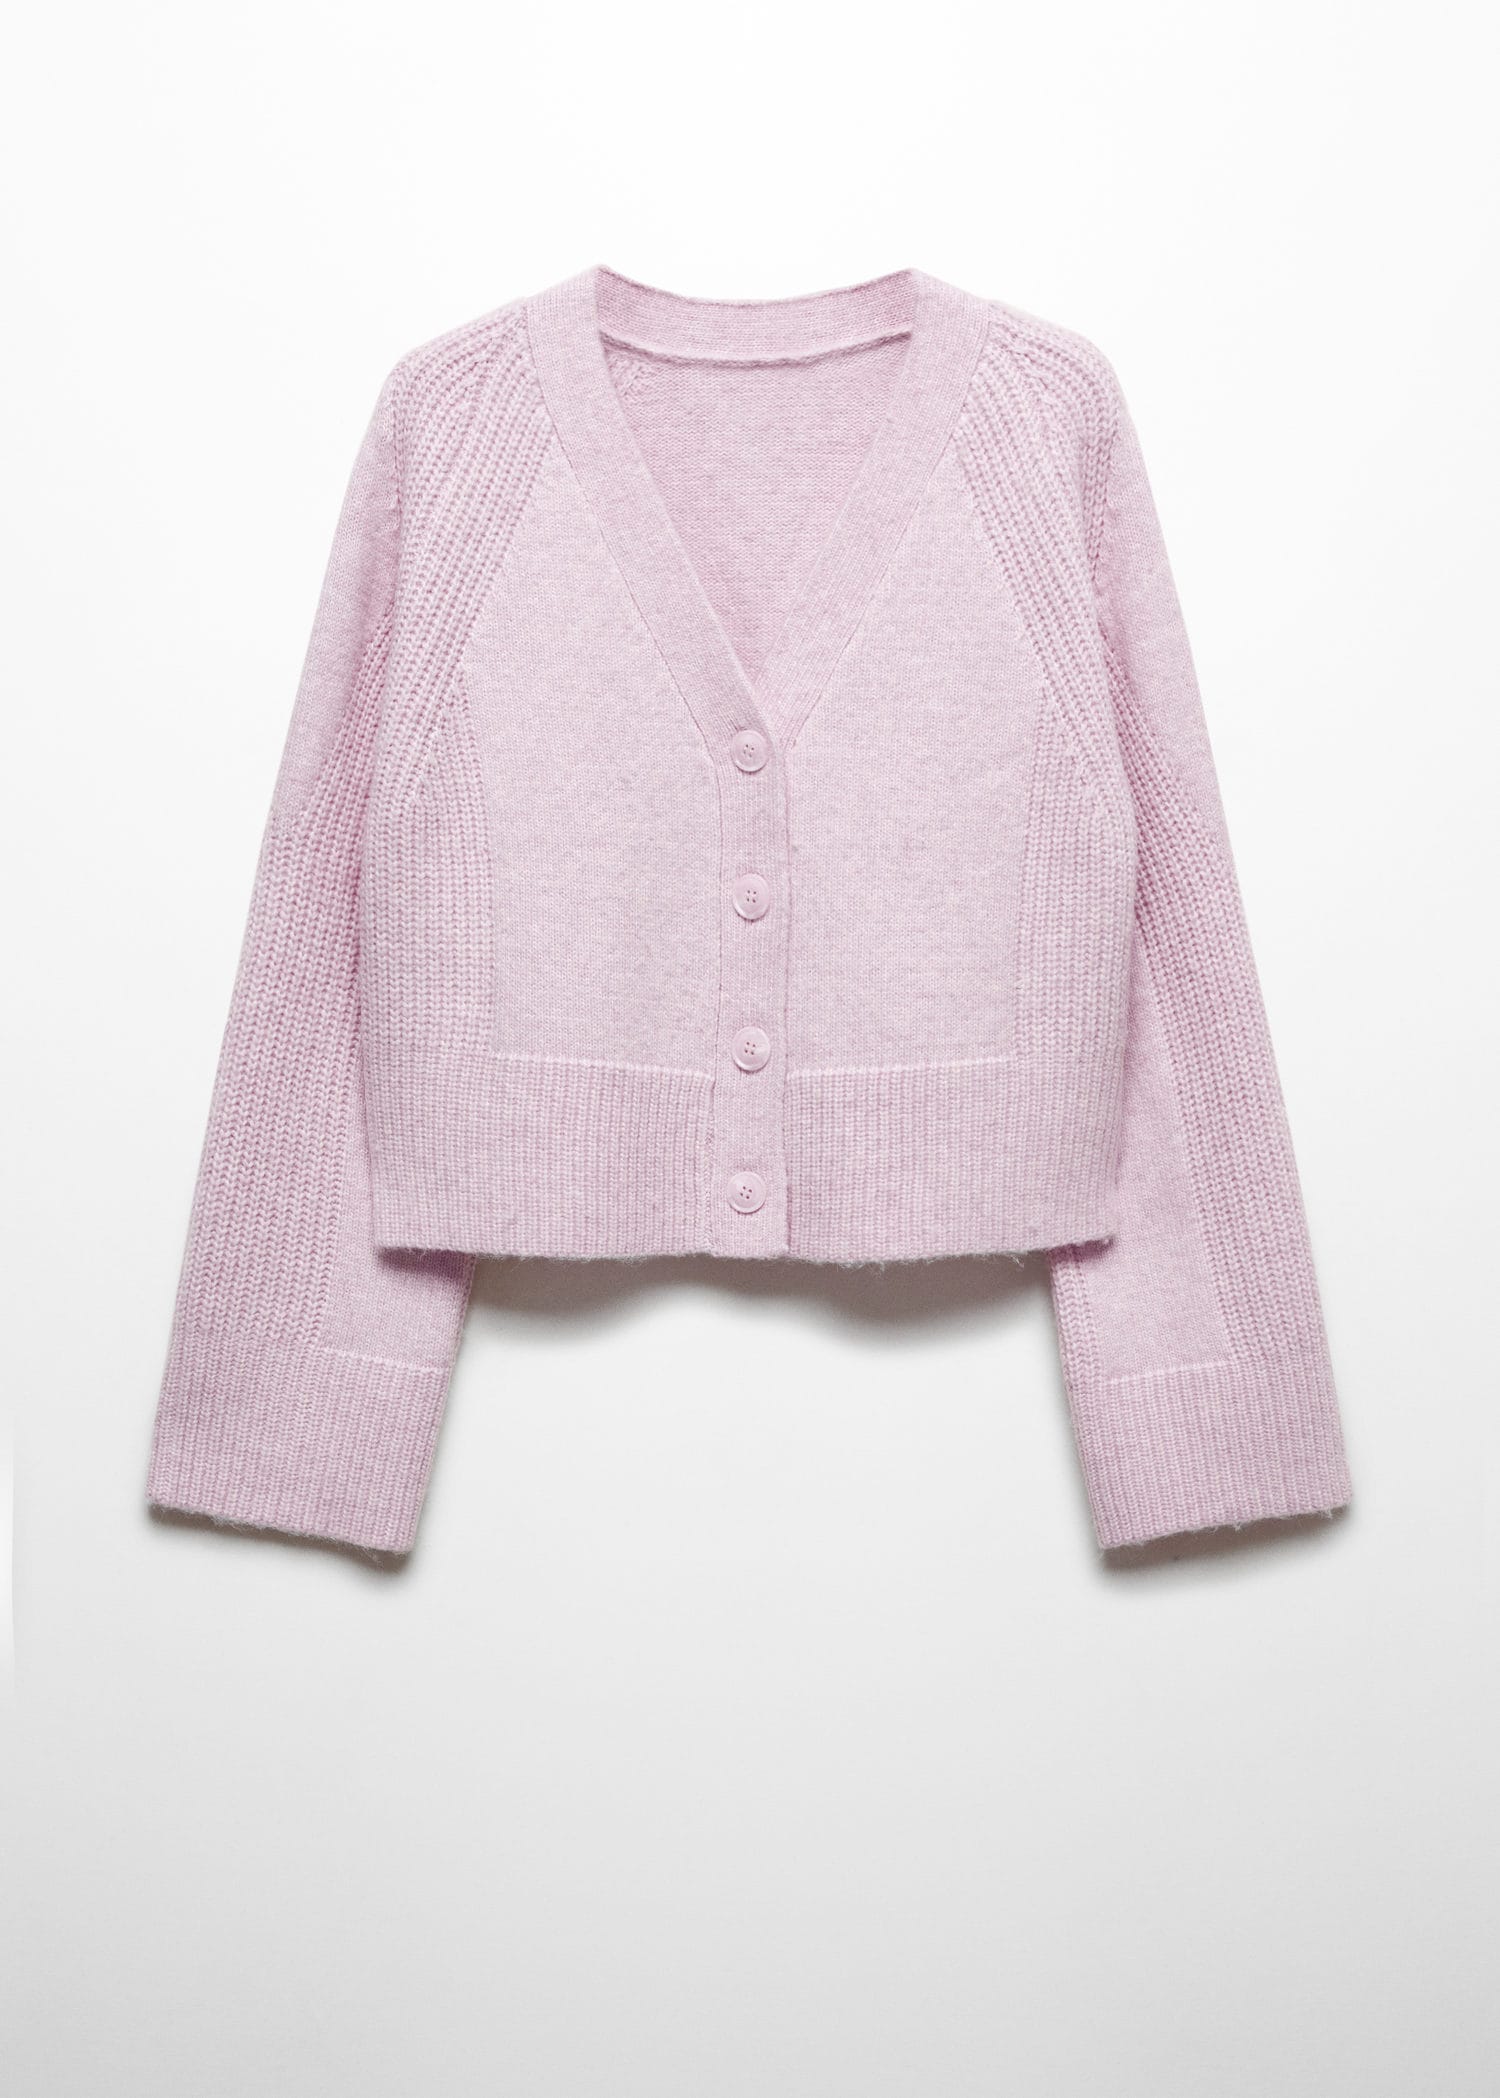 J.Jill Wearever Twinset Plus 2X Pink Knit Cardigan V Neck Button